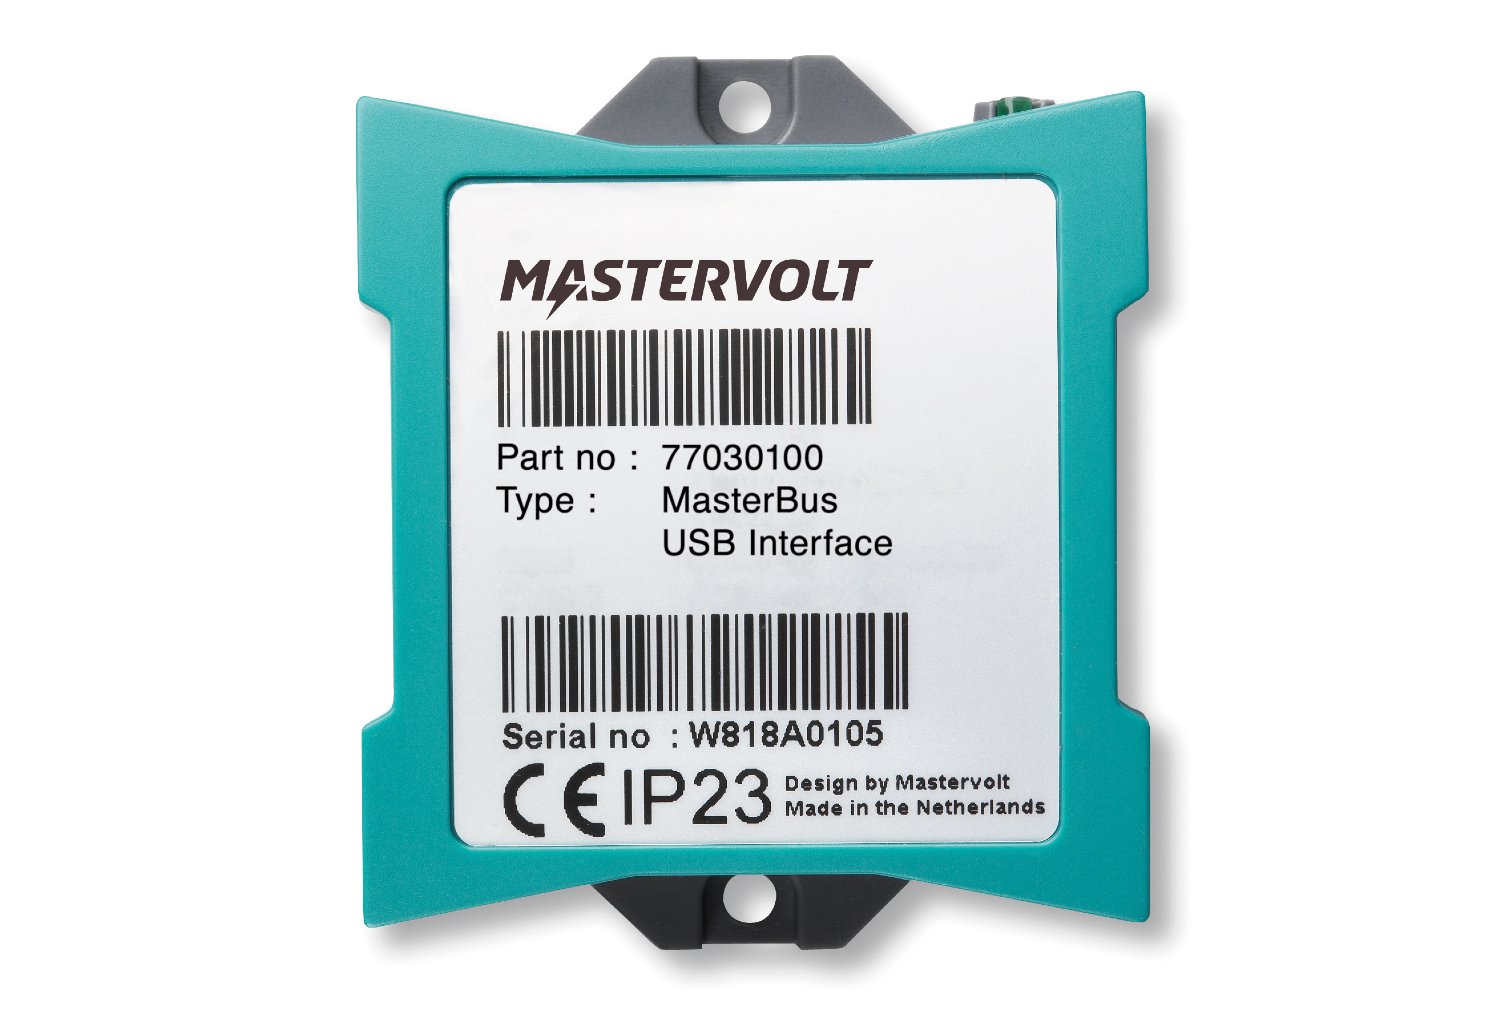 Mastervolt-MasterBus-USB-Interface-front-Fischer-Panda